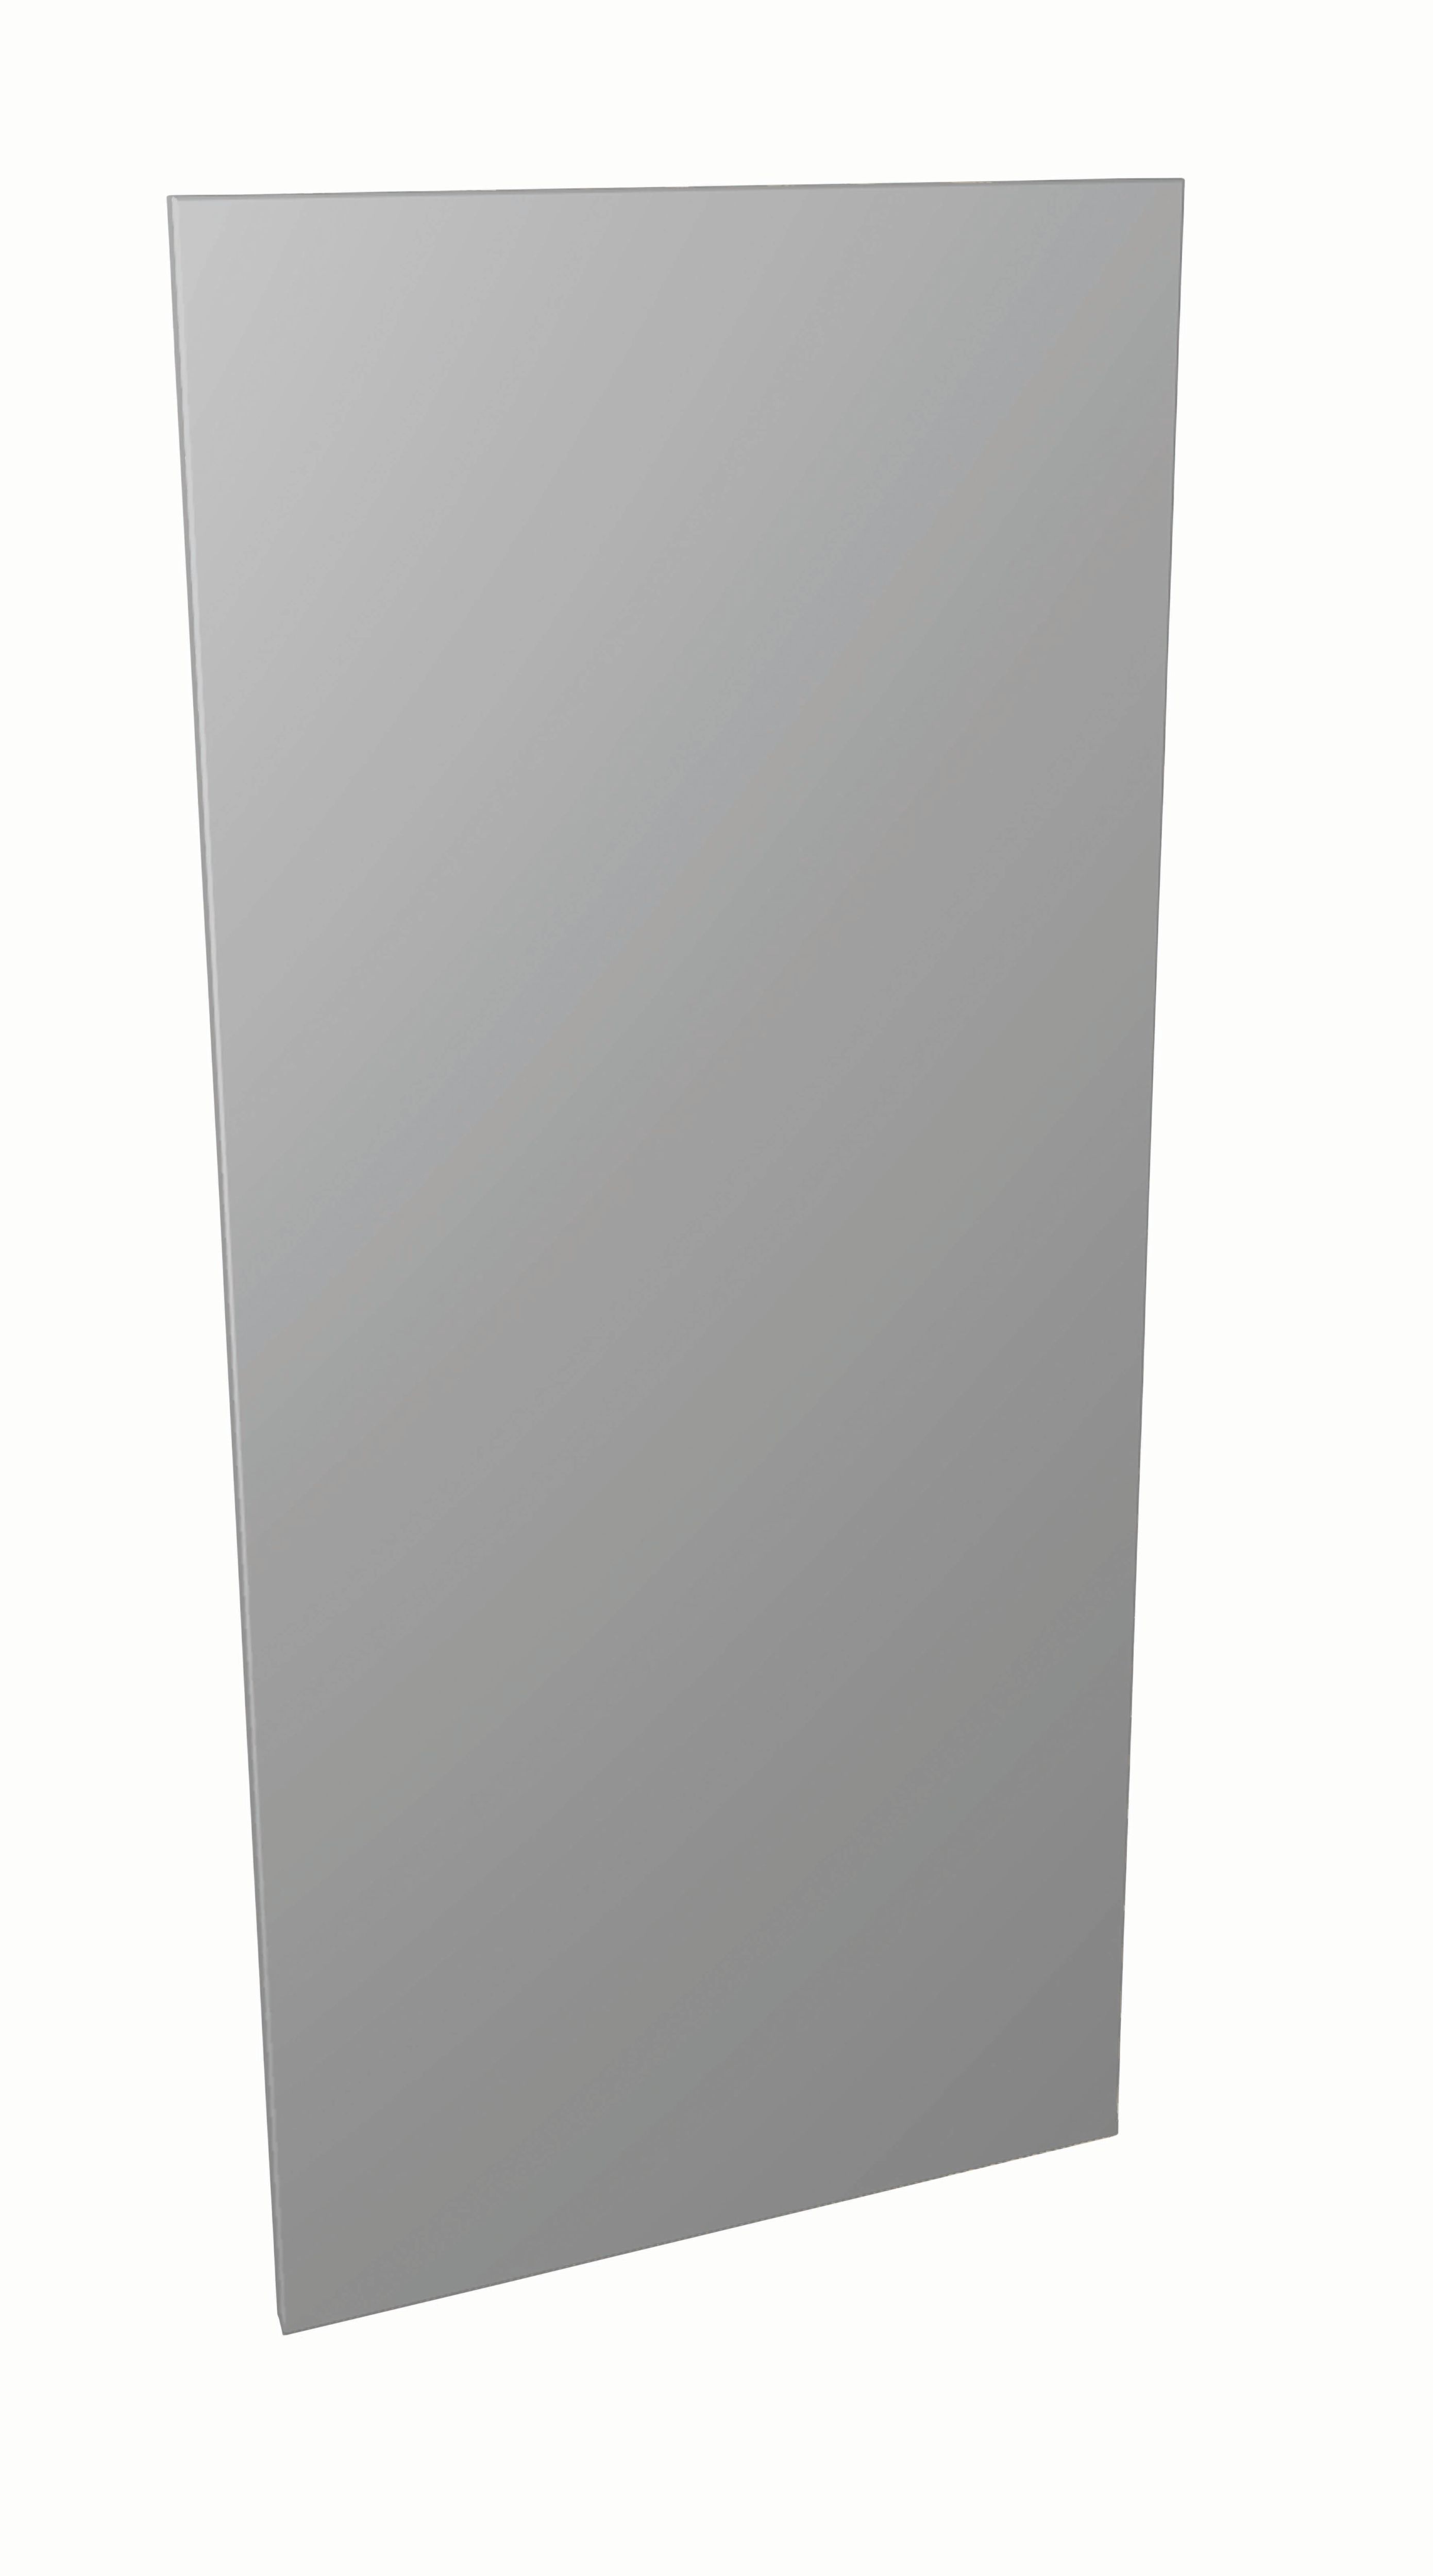 Image of Wickes Madison Grey Gloss Handleless Appliance Door (A) - 600 x 1319mm